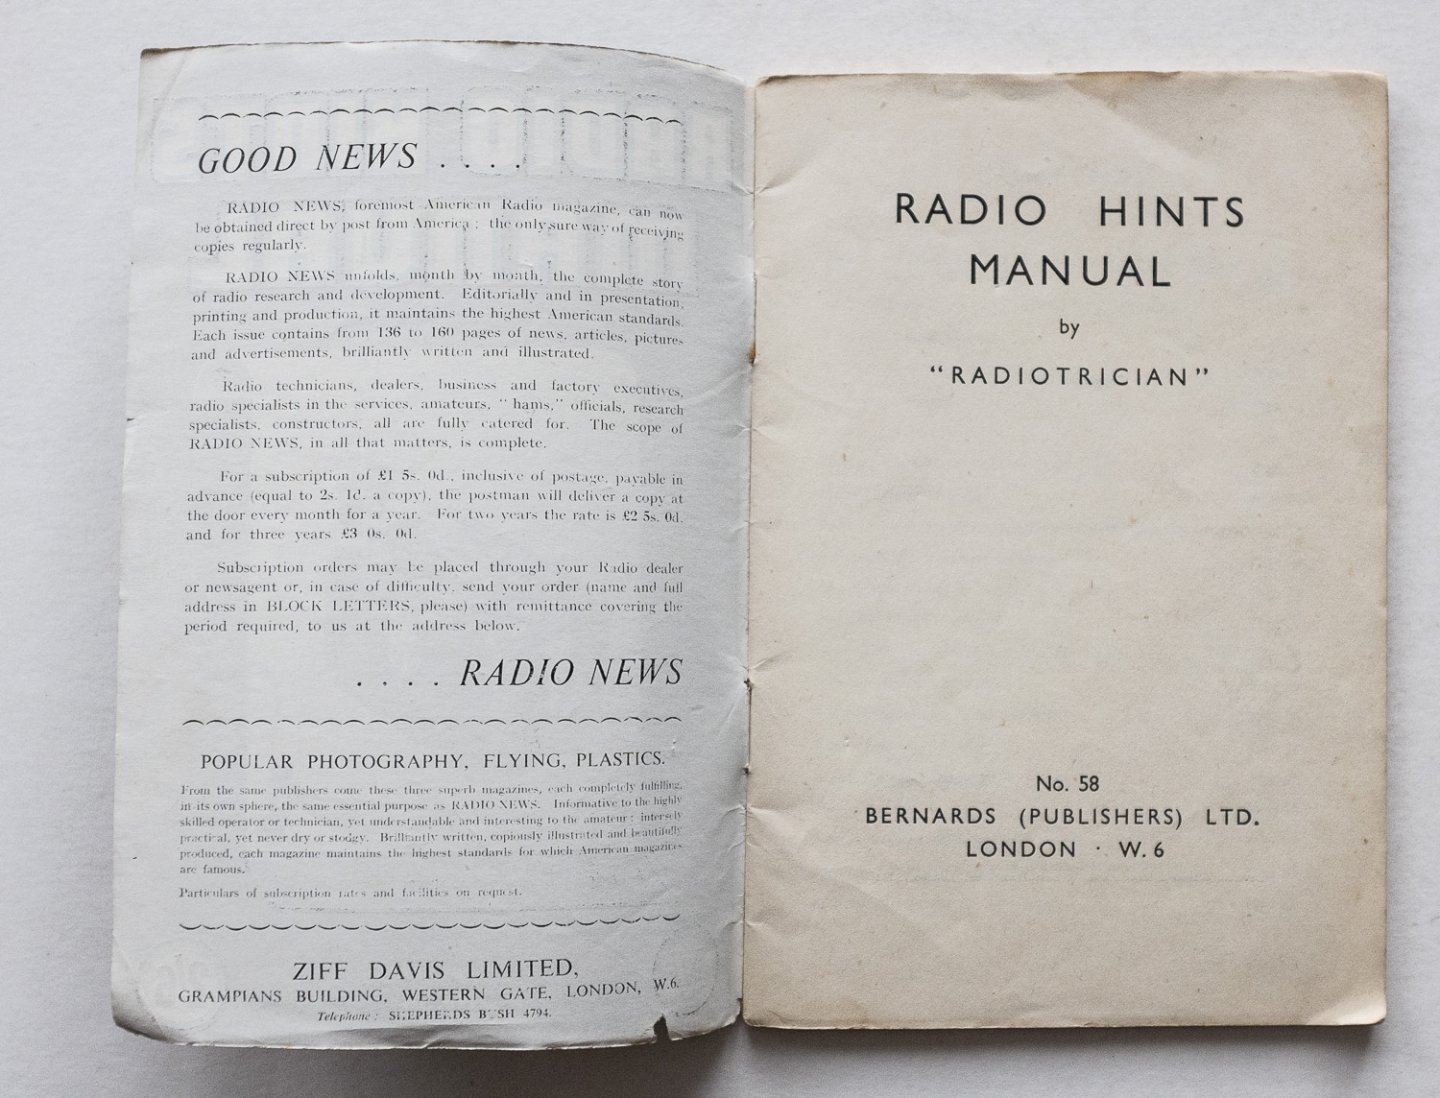 Radiotrician - Radio hints manual